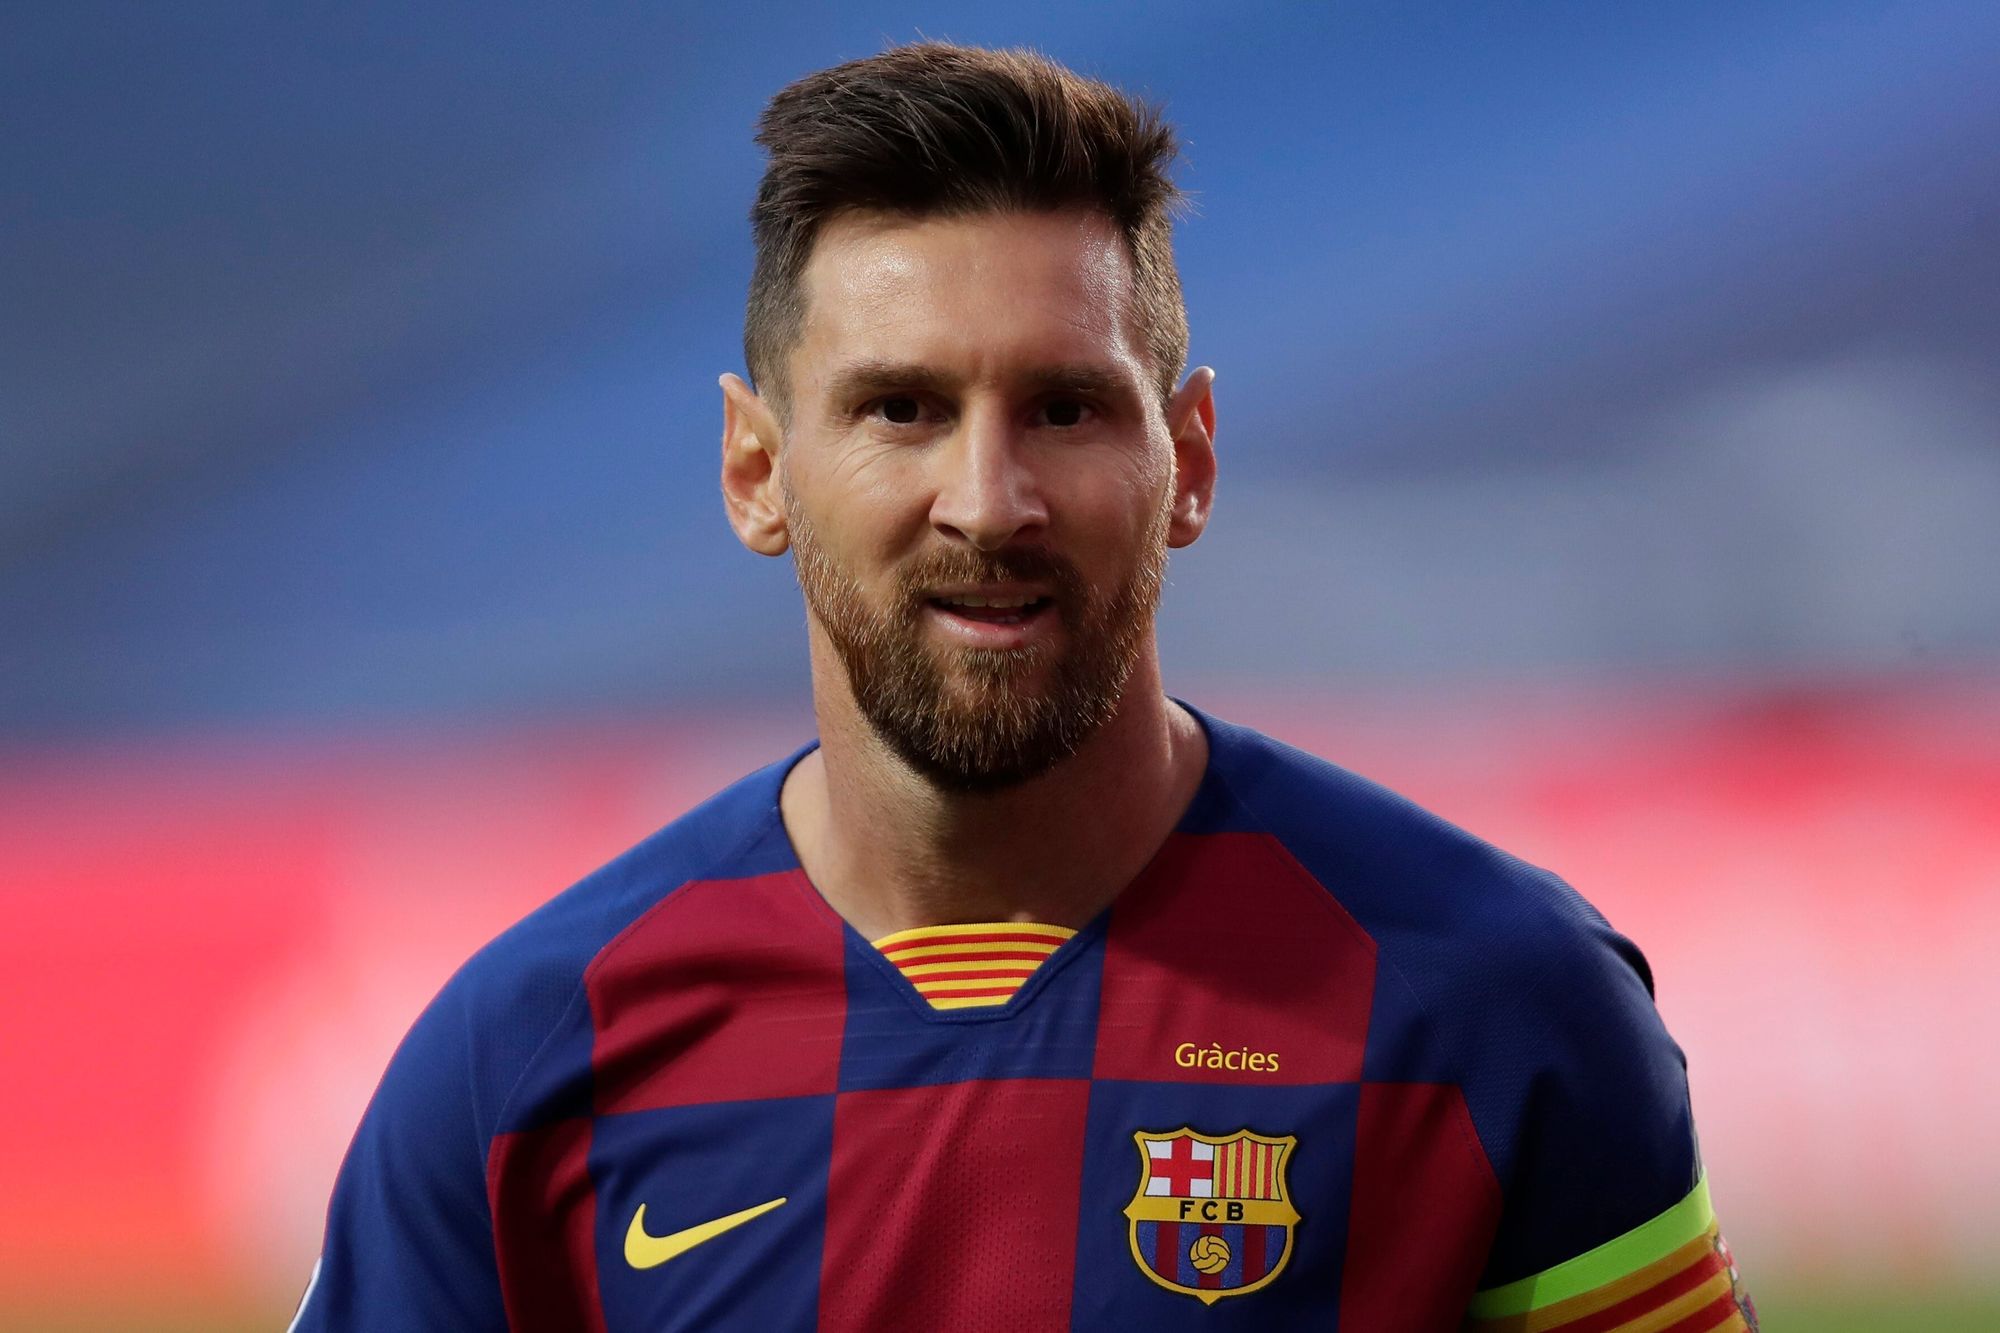 Tiểu sử của Messi